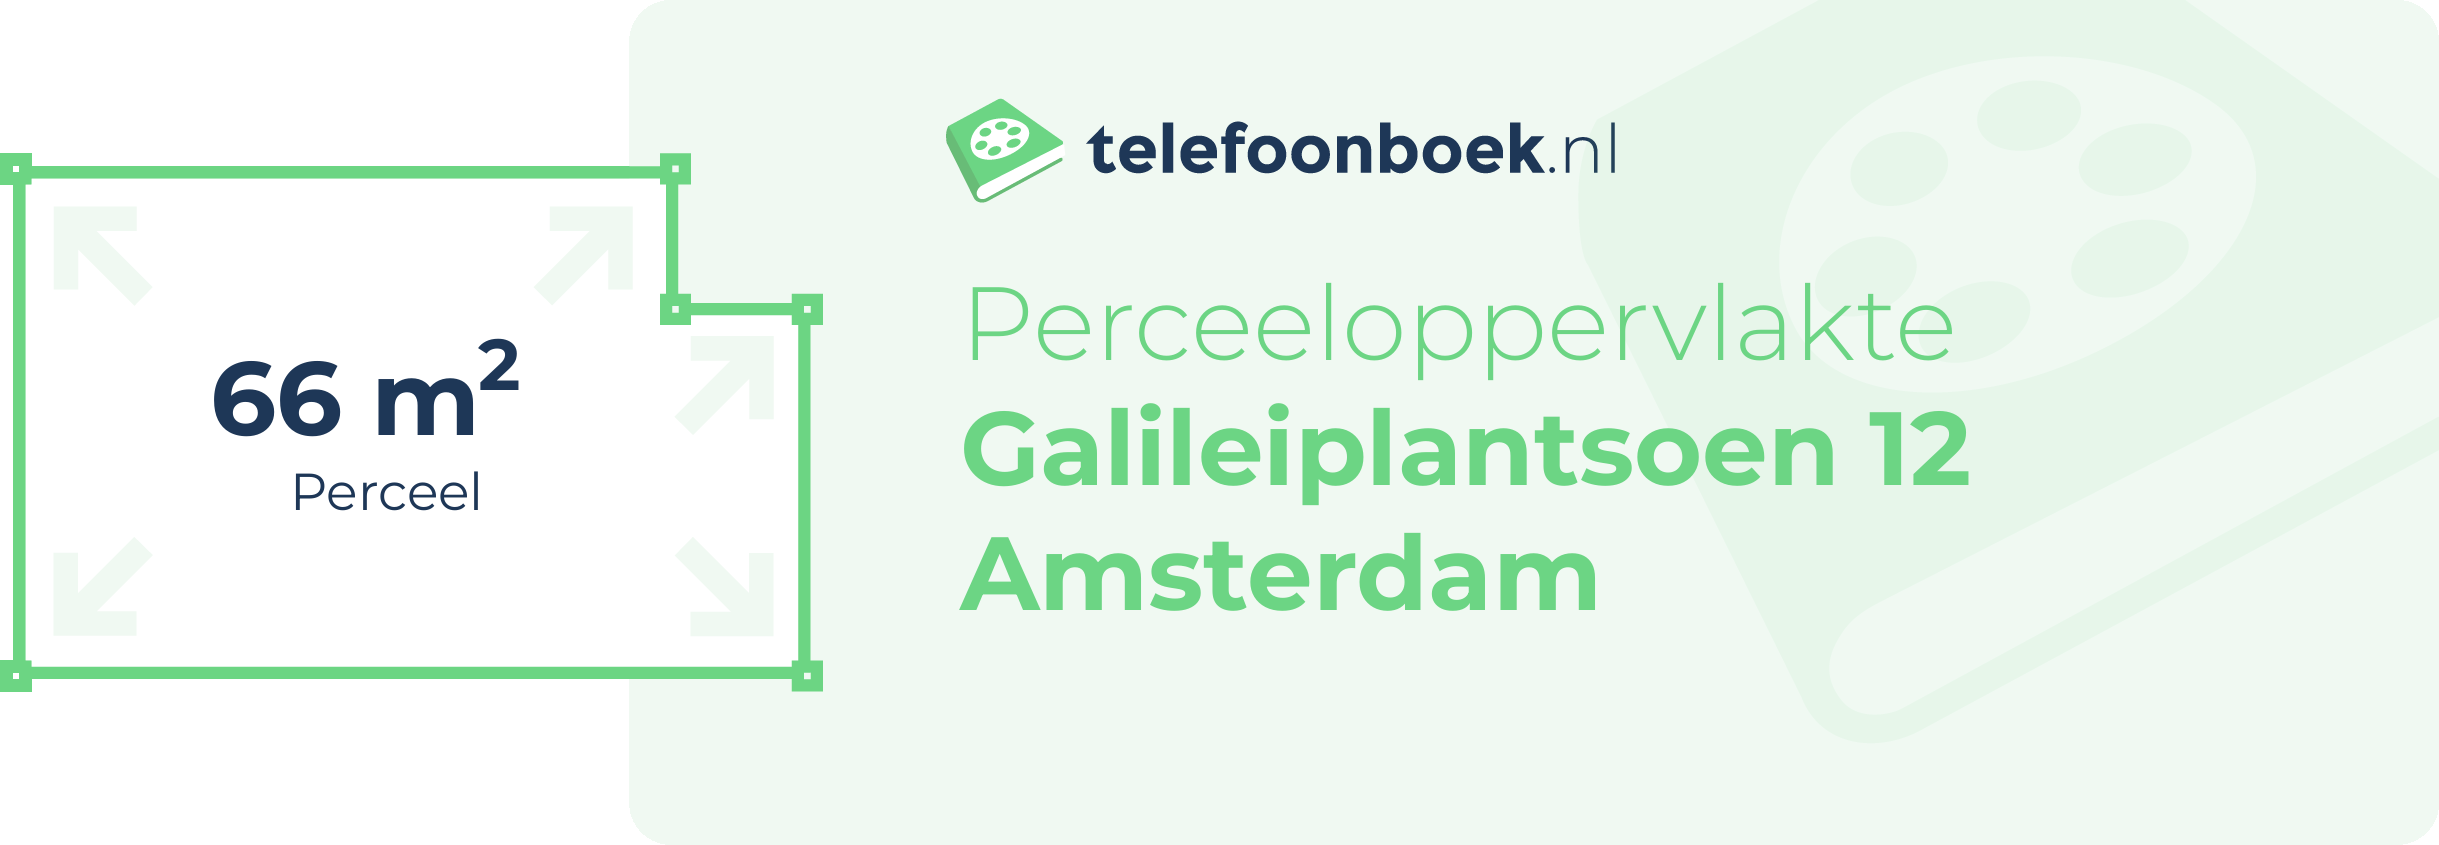 Perceeloppervlakte Galileiplantsoen 12 Amsterdam